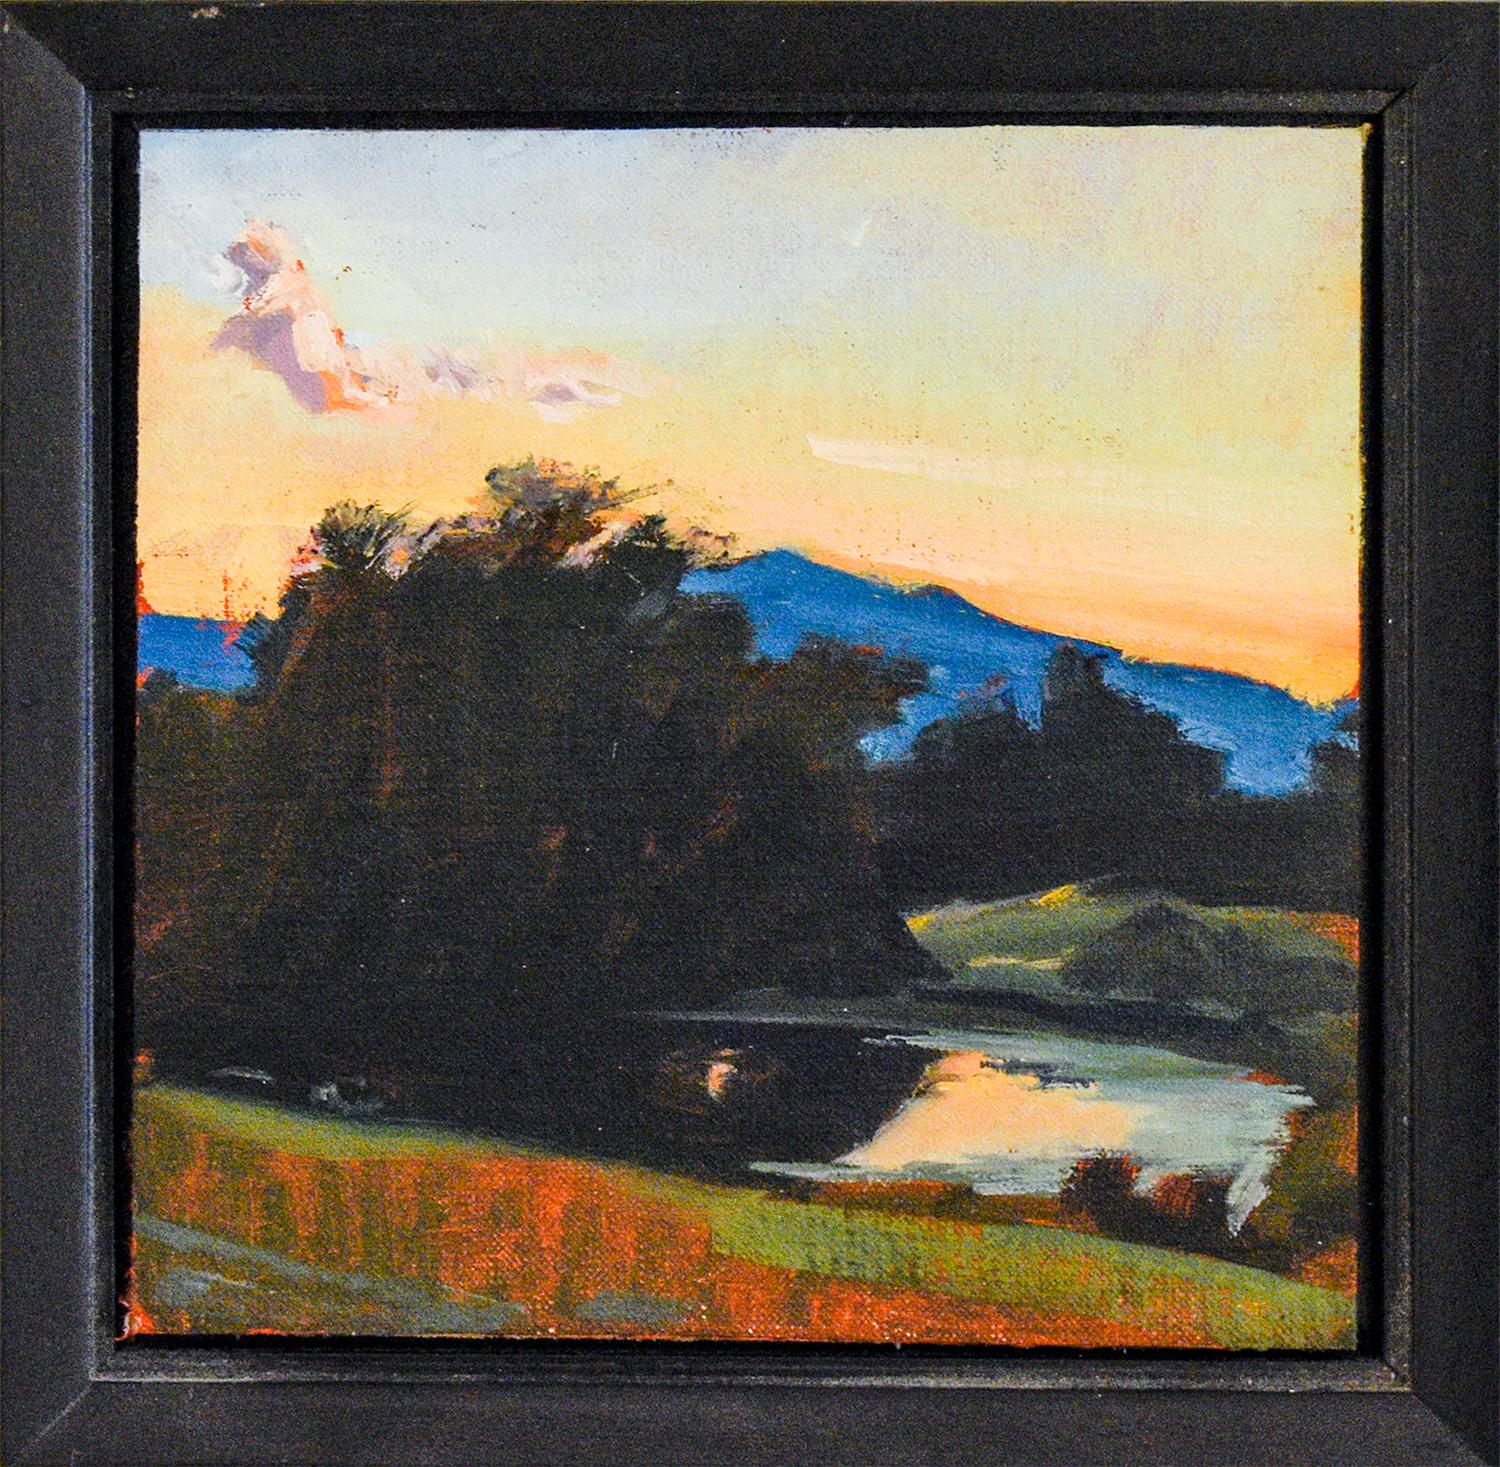 John Kelly Landscape Painting - Autumn Landscape: Framed Hudson ValIey Impressionist En Plein Air Oil Painting